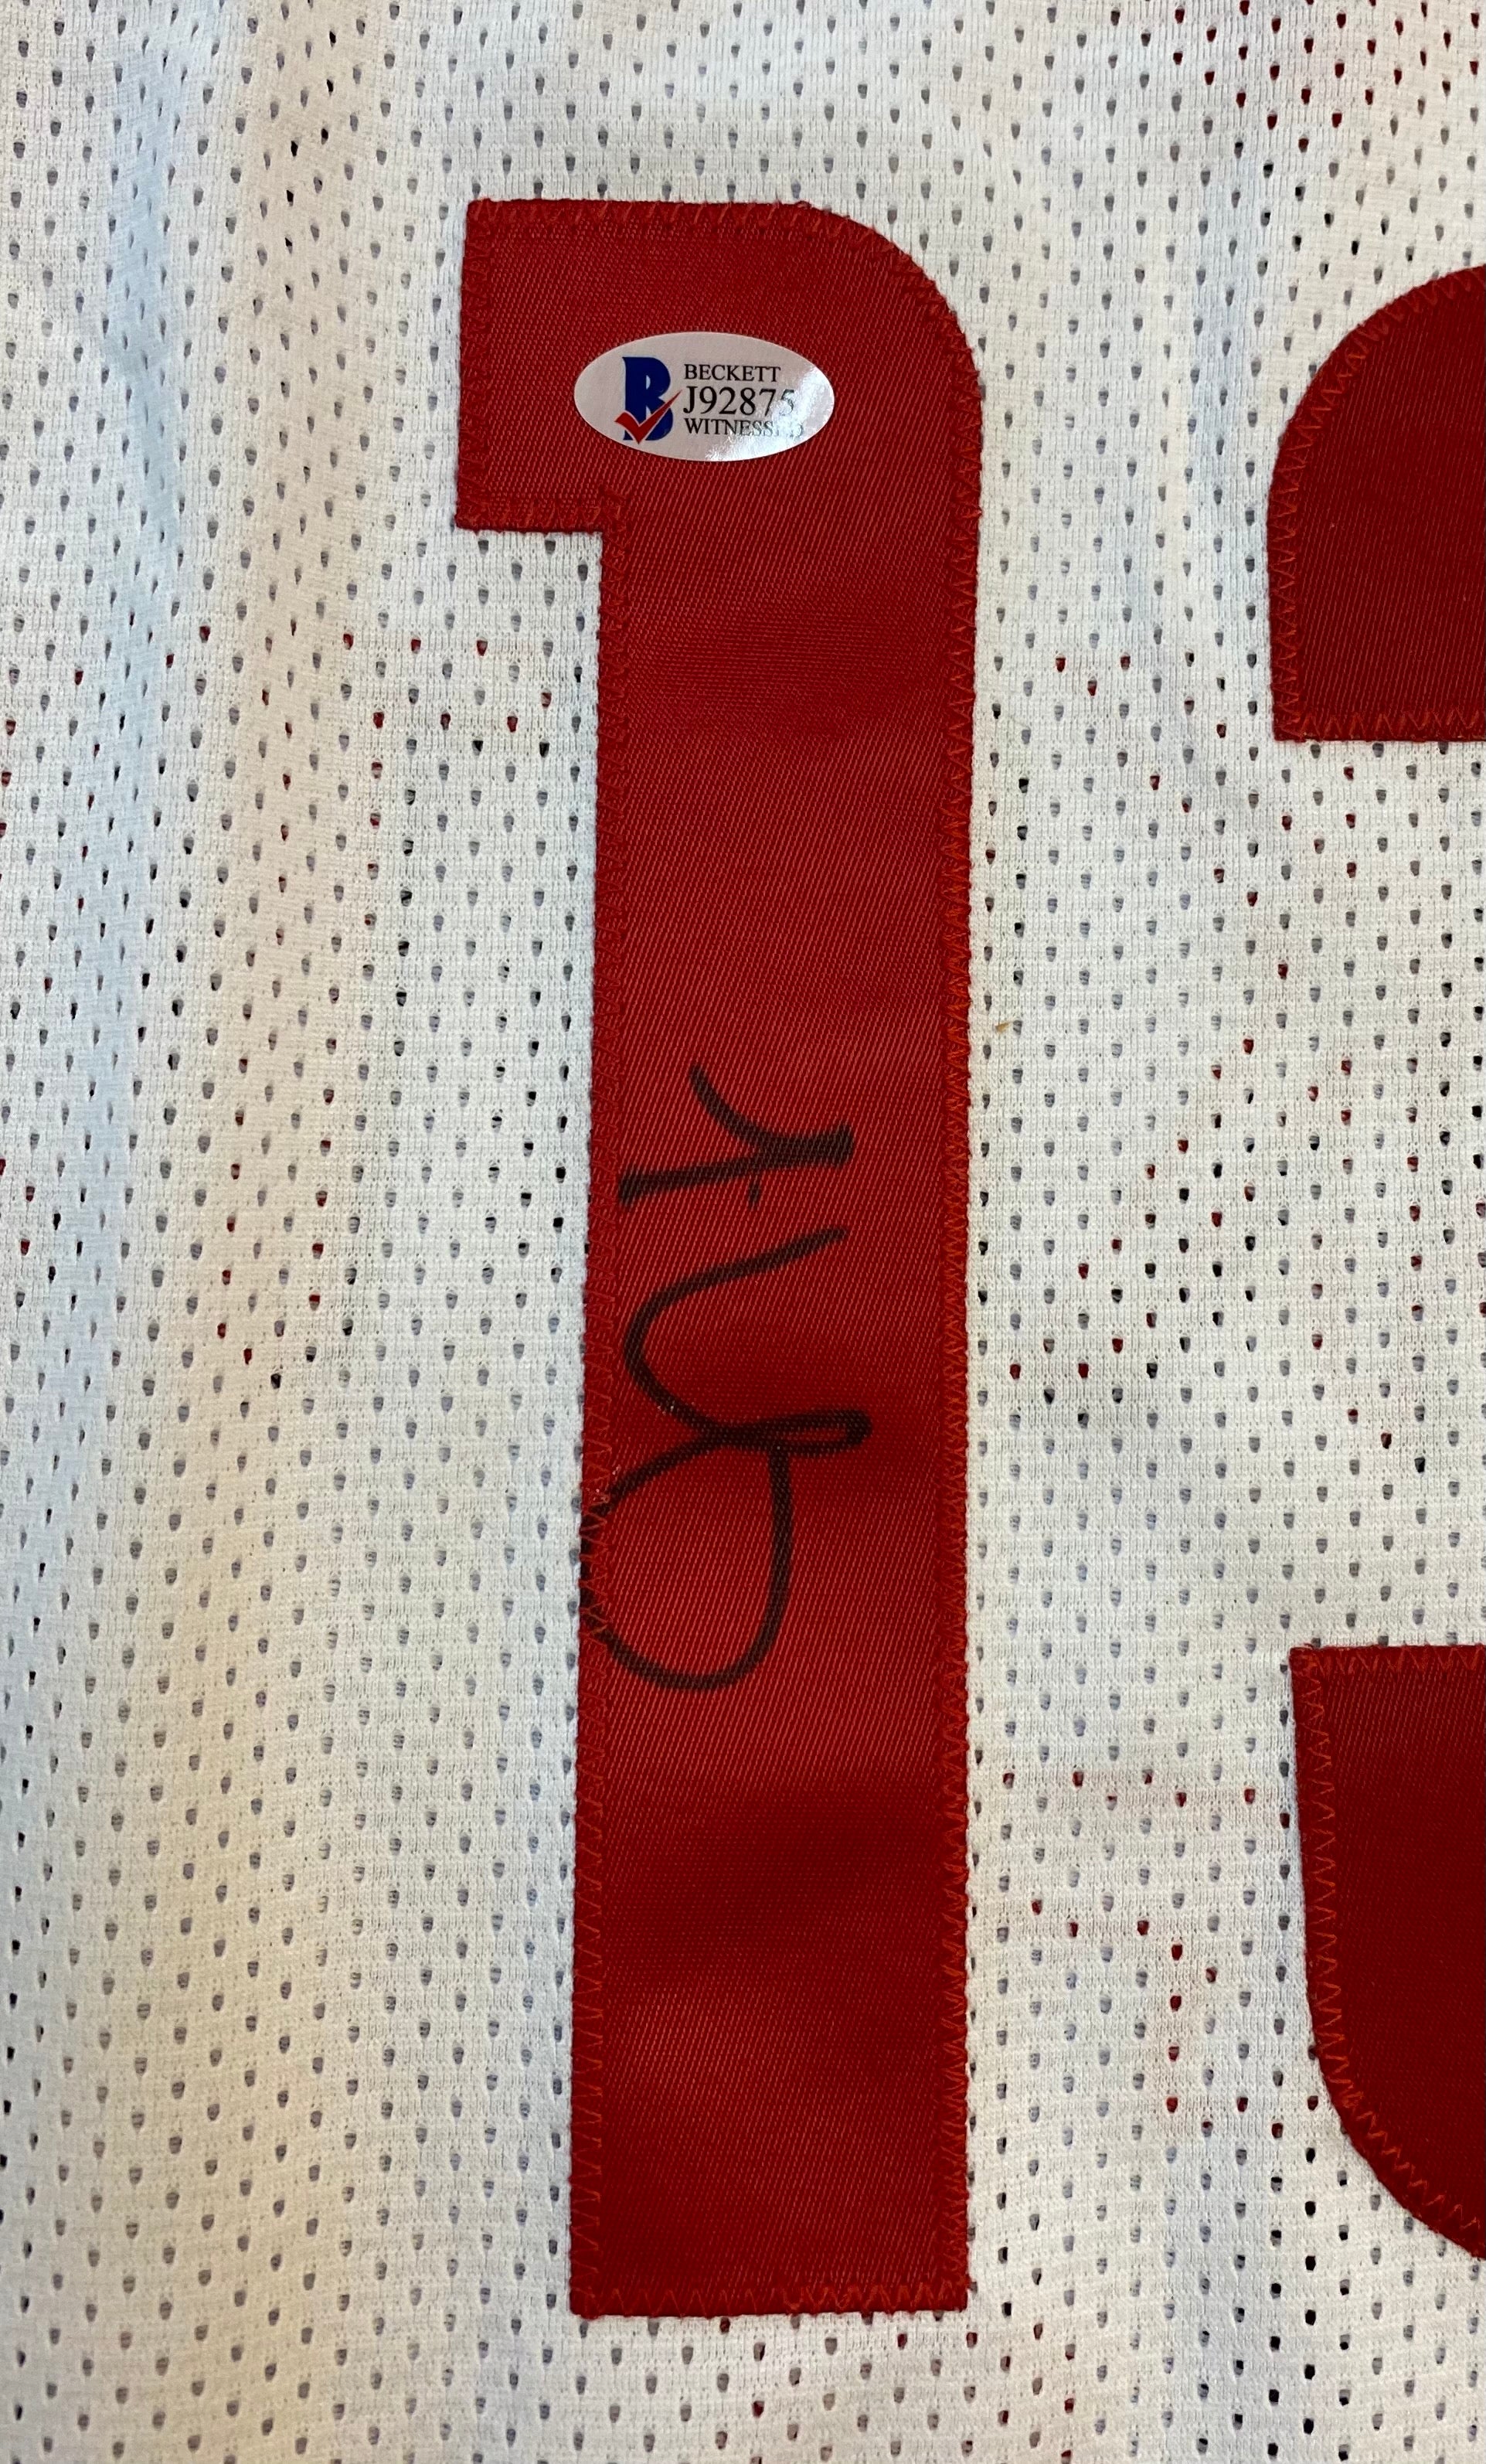 James Harden Signed Houston Rockets Jersey (Beckett COA) (Size: XL)